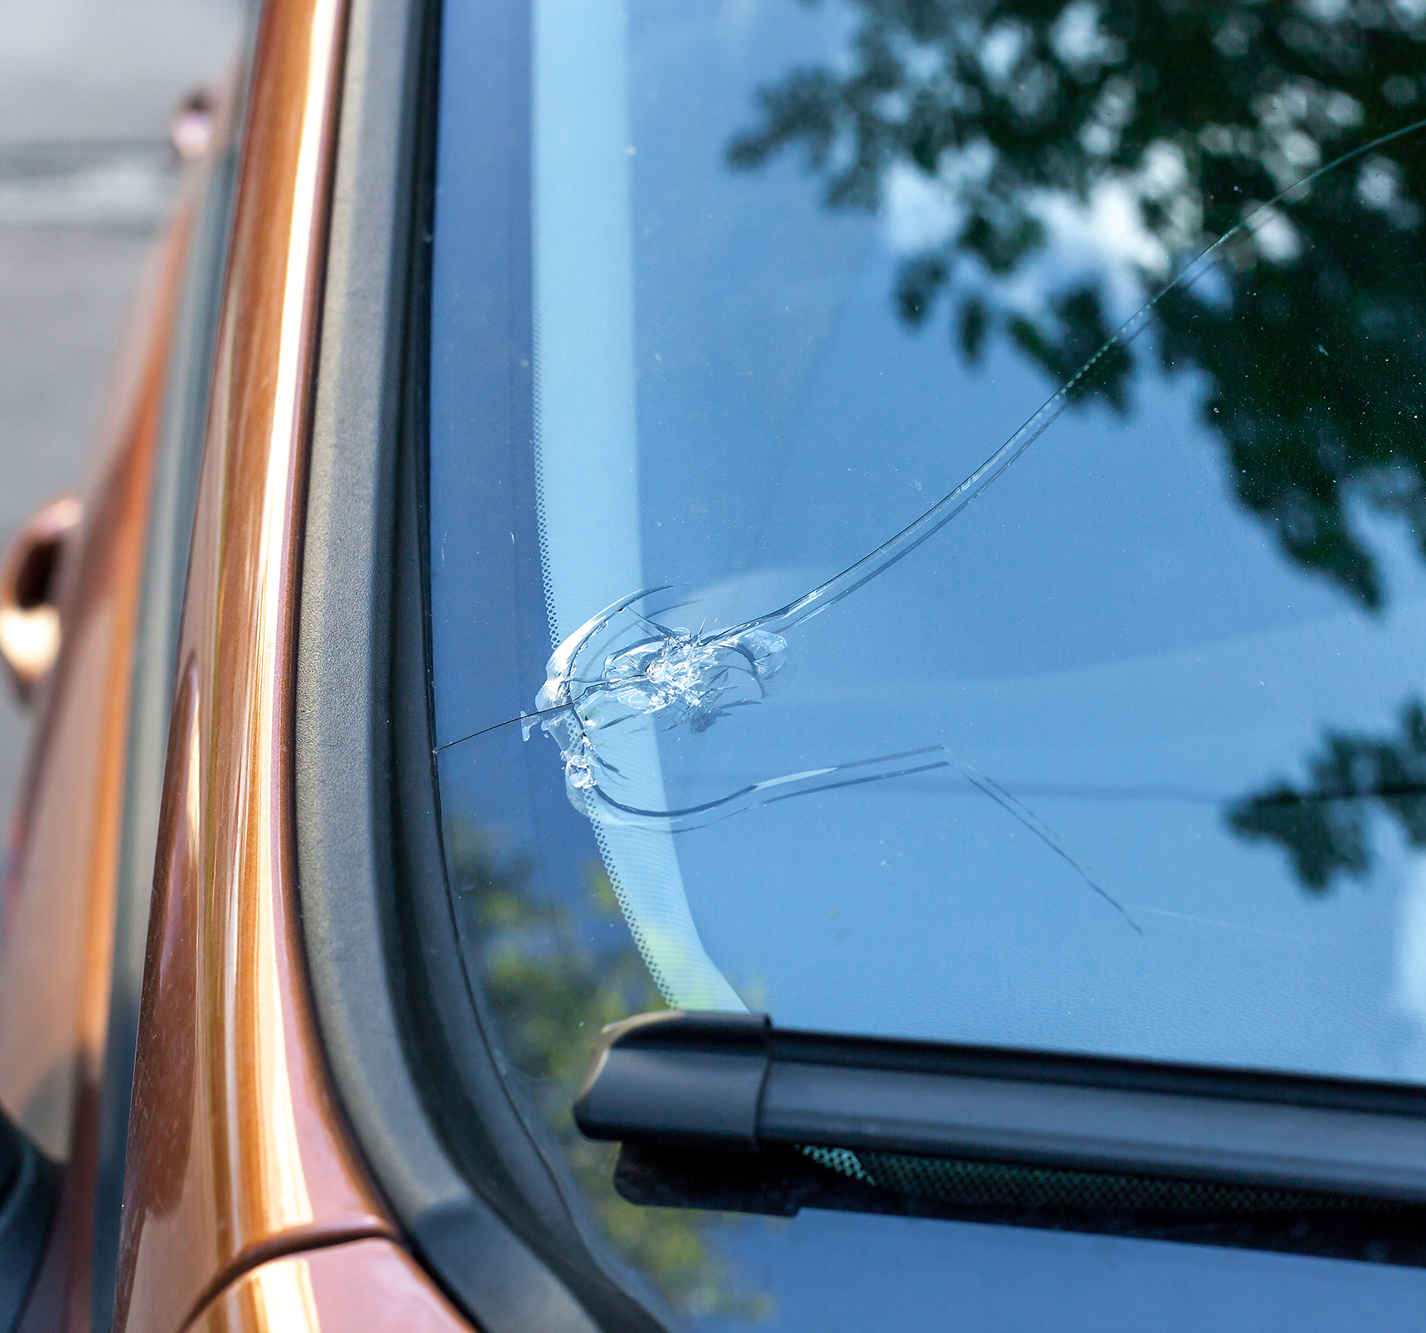 Broken windshield of a car.